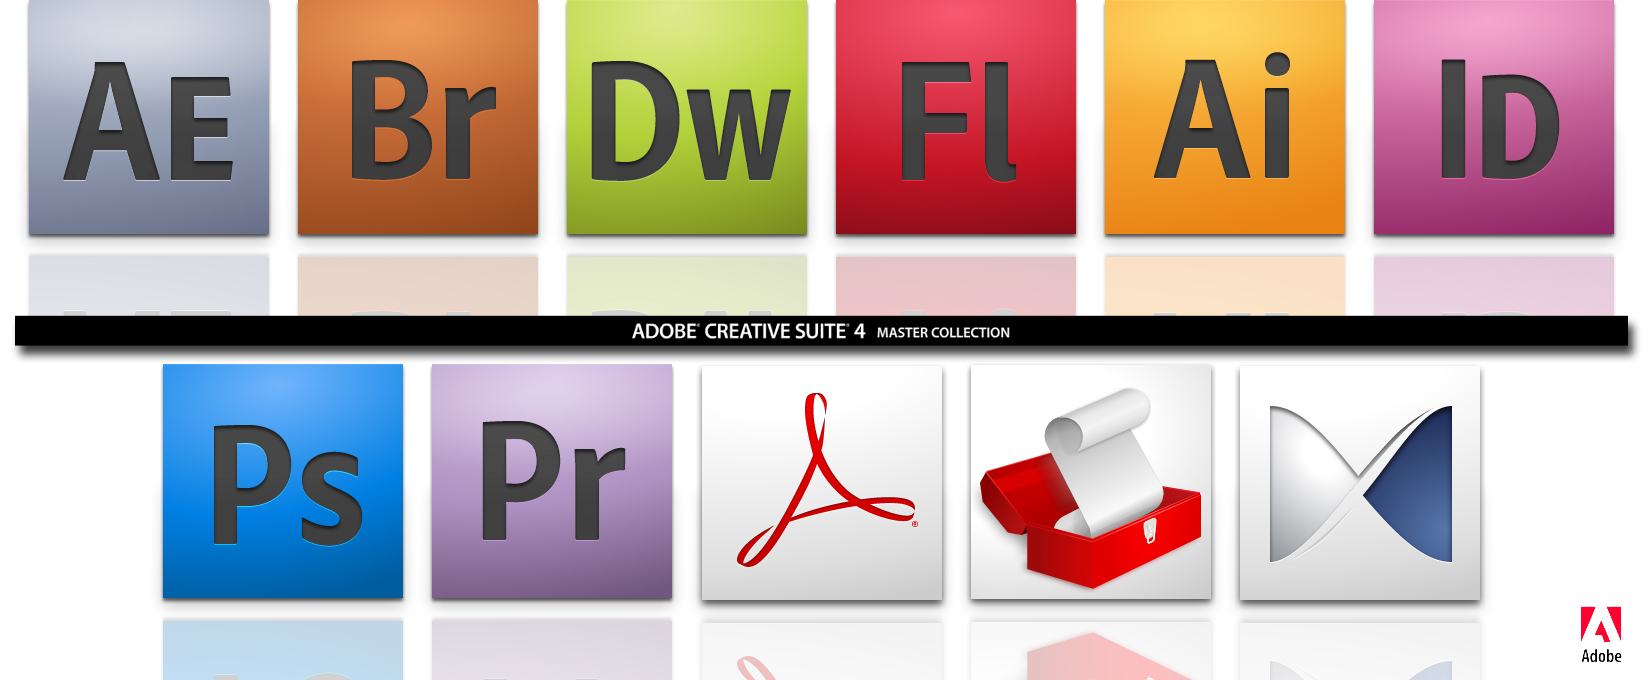 Adobe Creative Suite 4 :: Behance